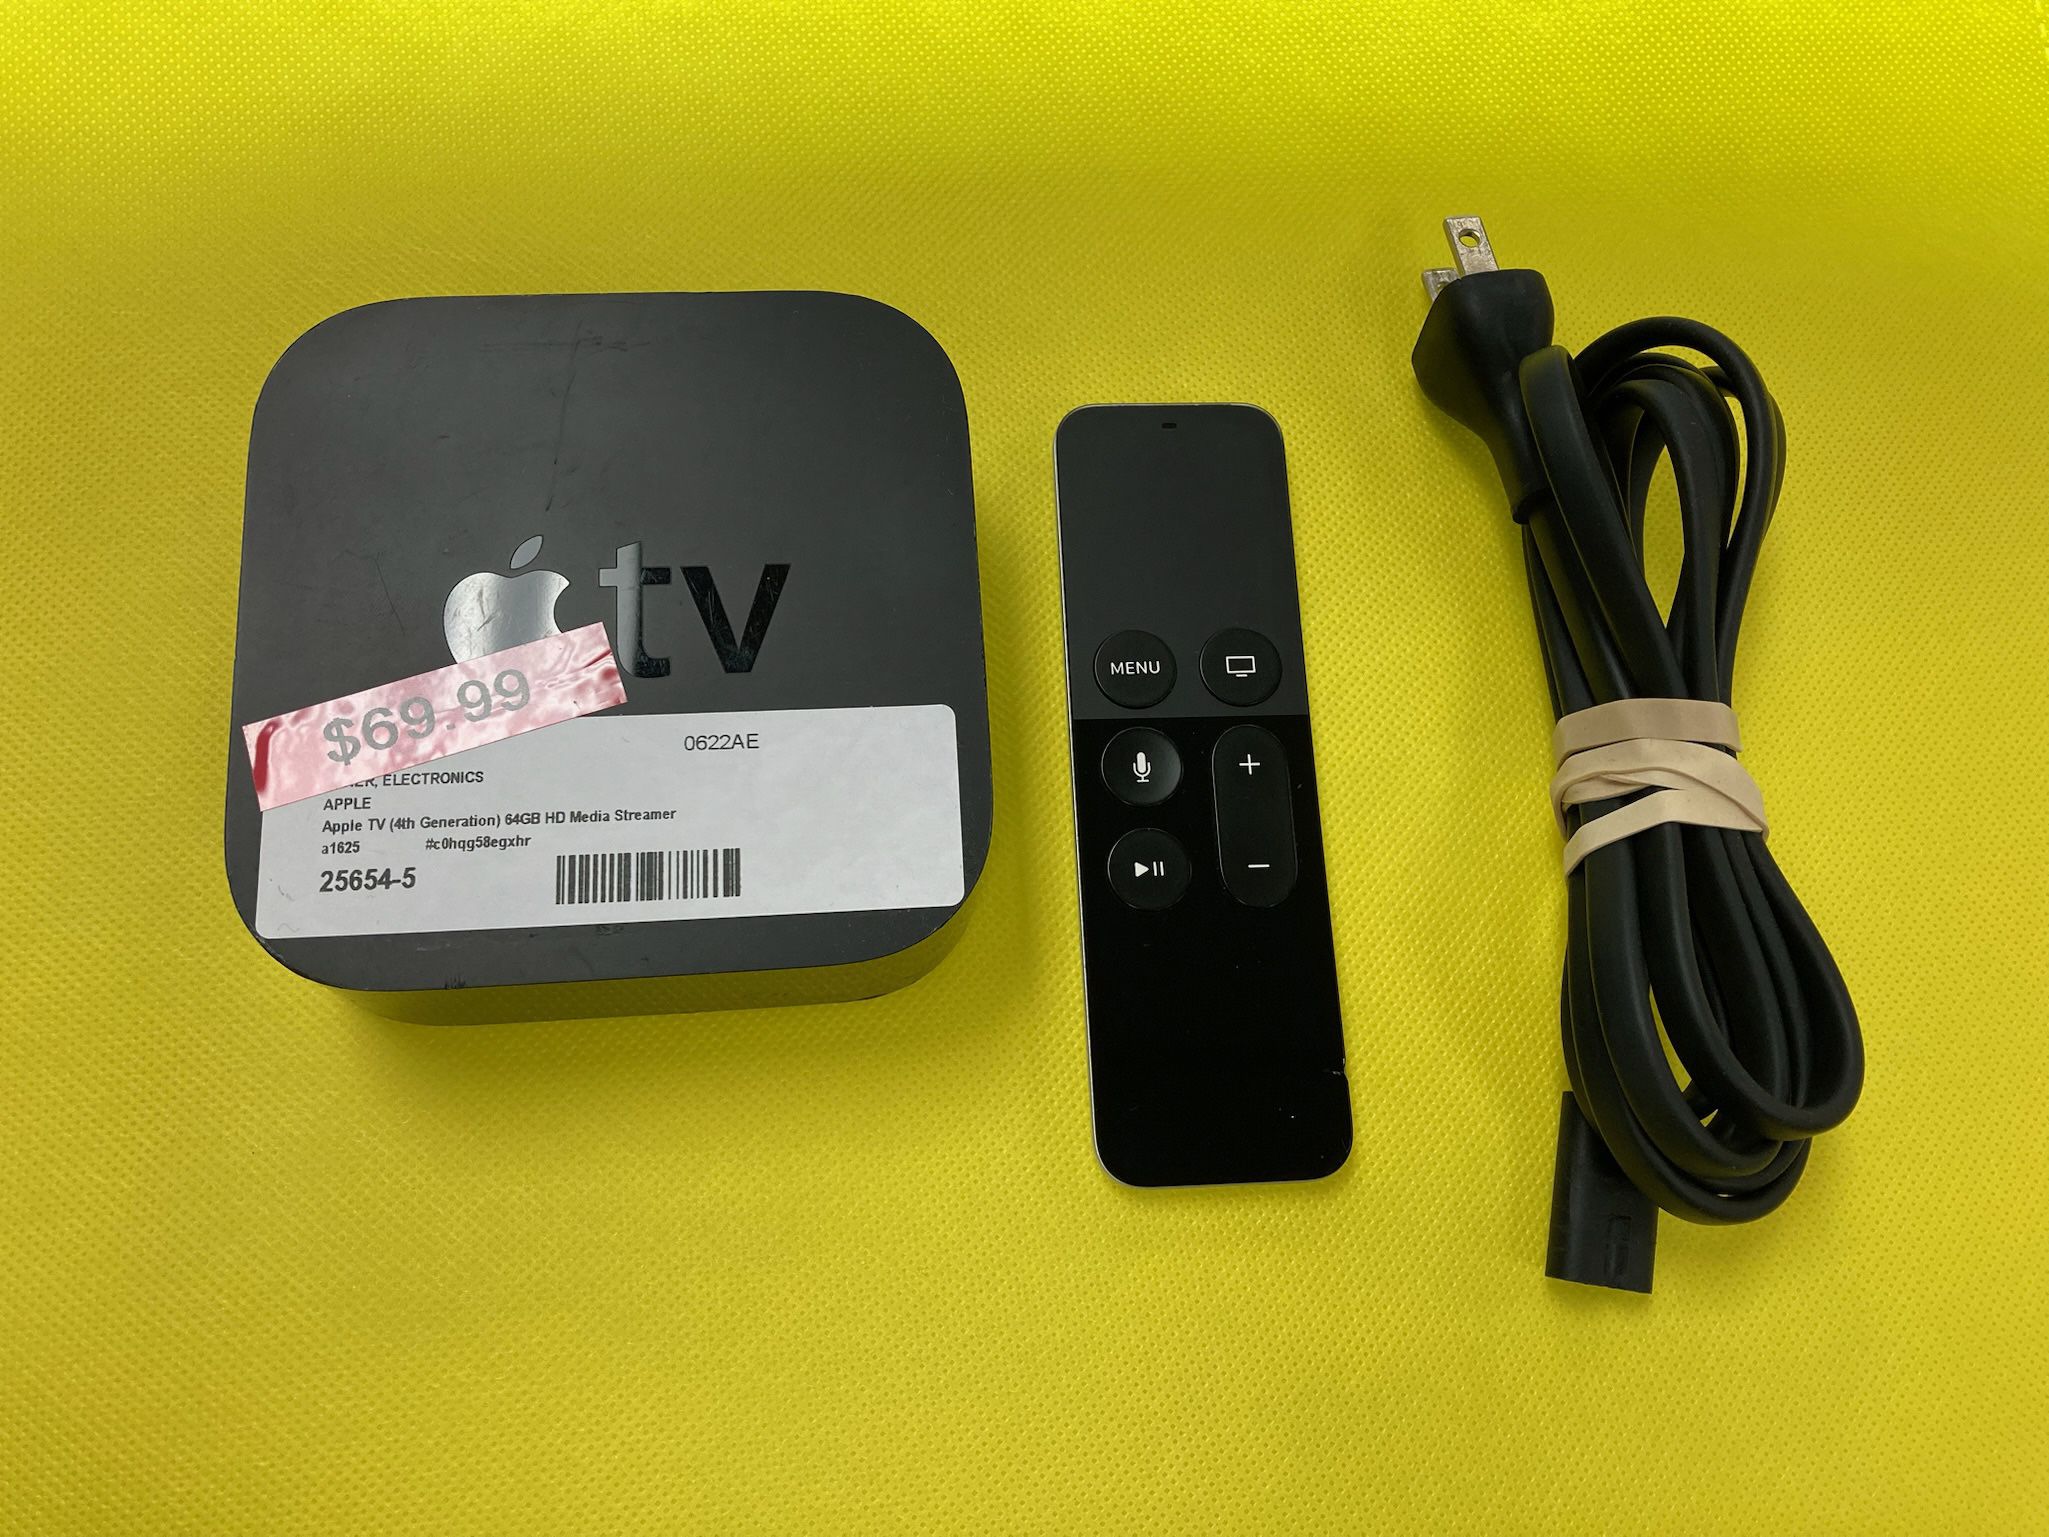 Apple TV A1625 (4th Generation) 64GB HD Media Streamer